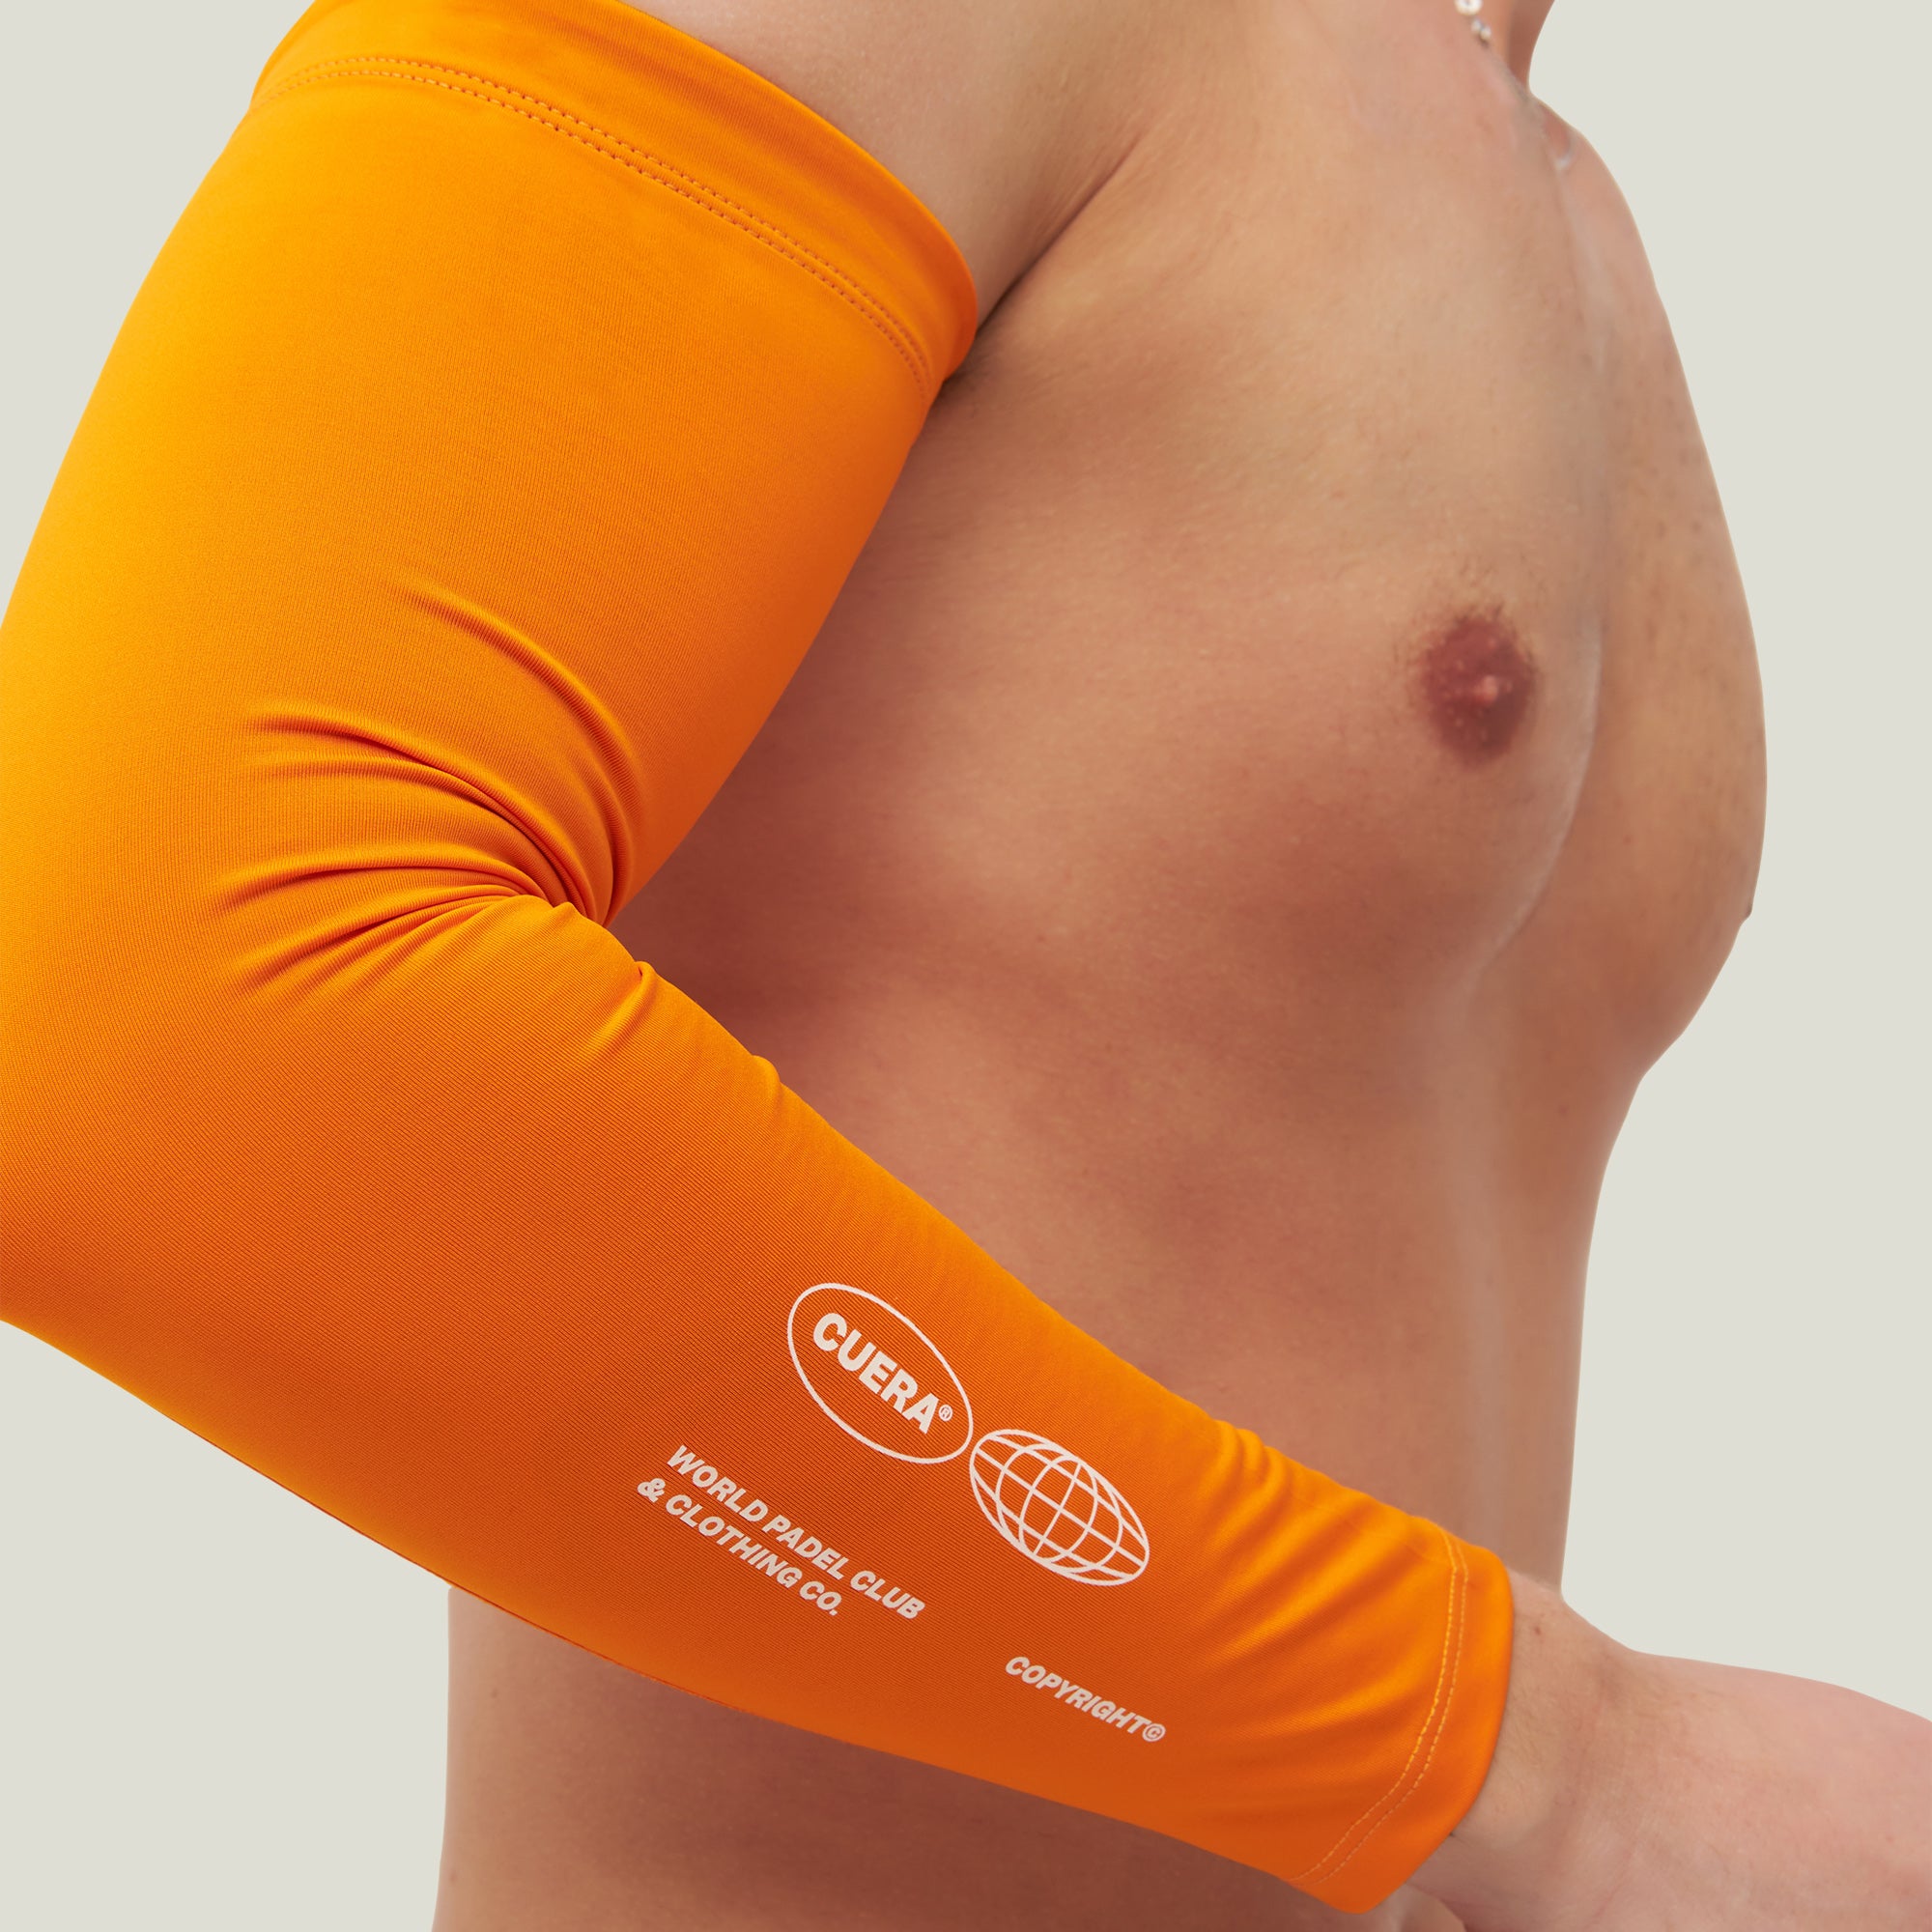 Cuera Oncourt Arm Sleeve (Orange) - L/XL